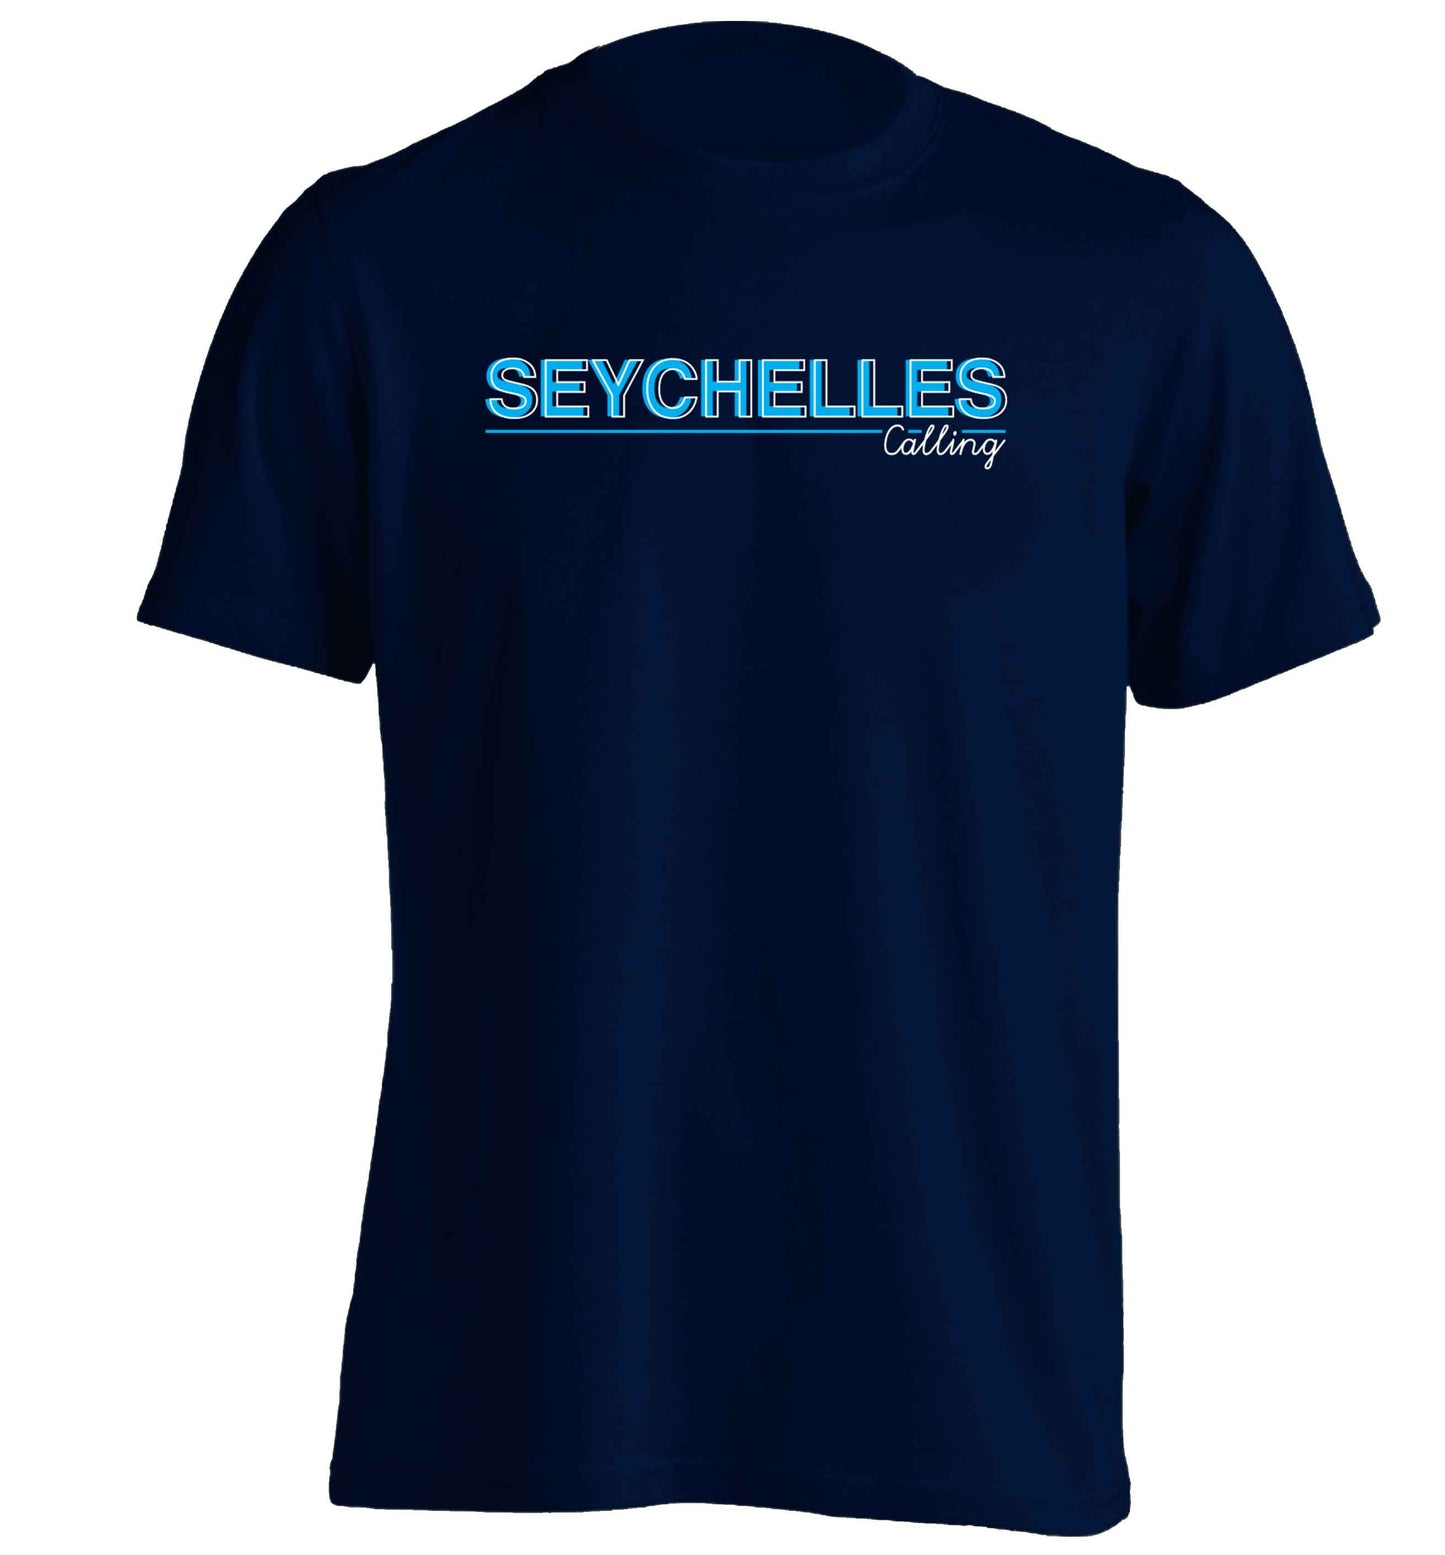 Seychelles calling adults unisex navy Tshirt 2XL